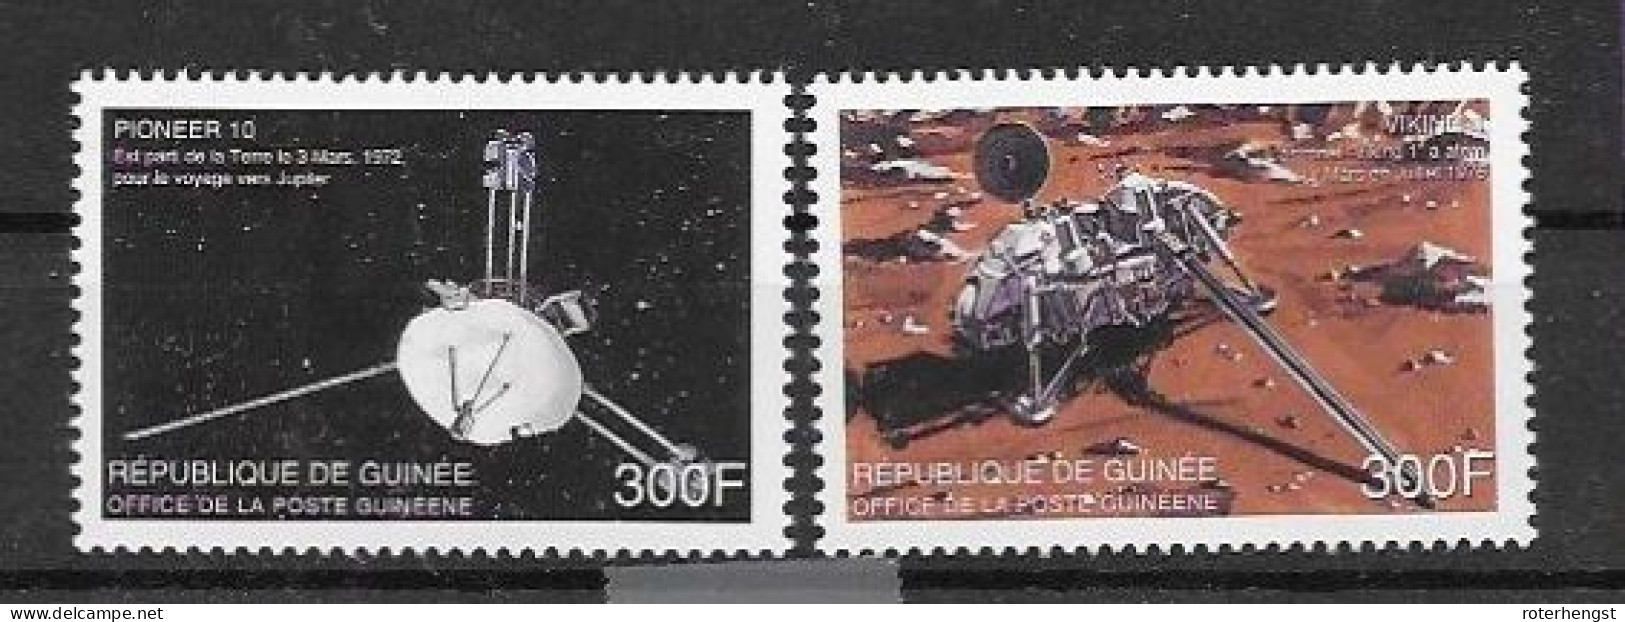 French Guinea Mnh ** Planets Space Set 1999 - Guinea (1958-...)